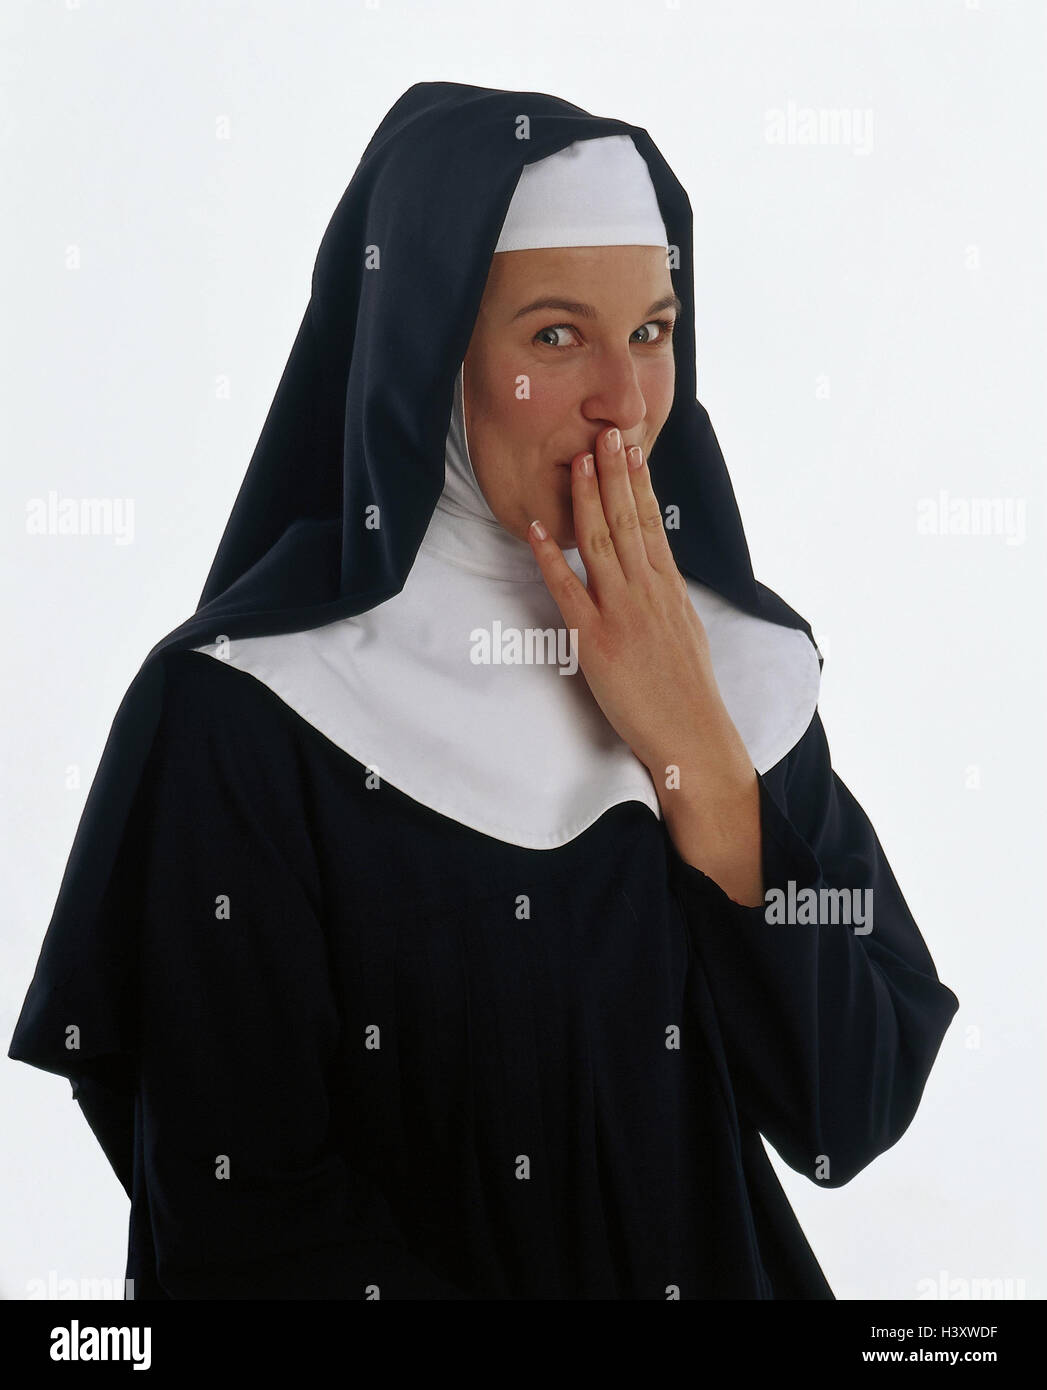 benedictine-nun-habit-gesture-lay-half-portrait-professions-studio-H3XWDF.jpg